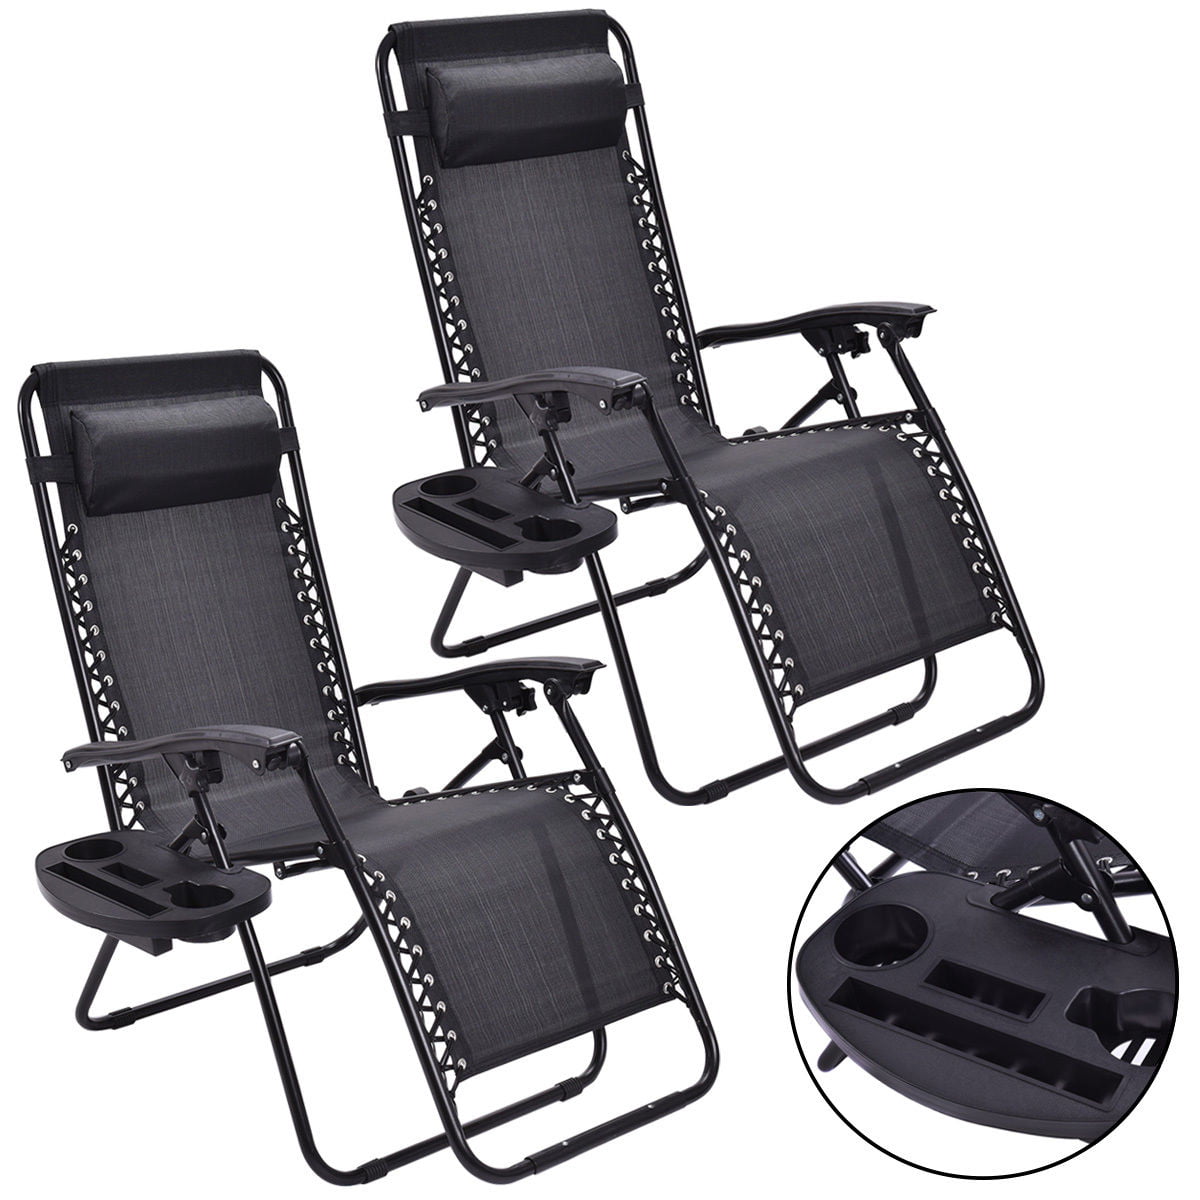 Costway 2pc Zero Gravity Chairs Lounge Patio Folding Recliner Outdoor Black W Cup Holder Walmart Com Walmart Com